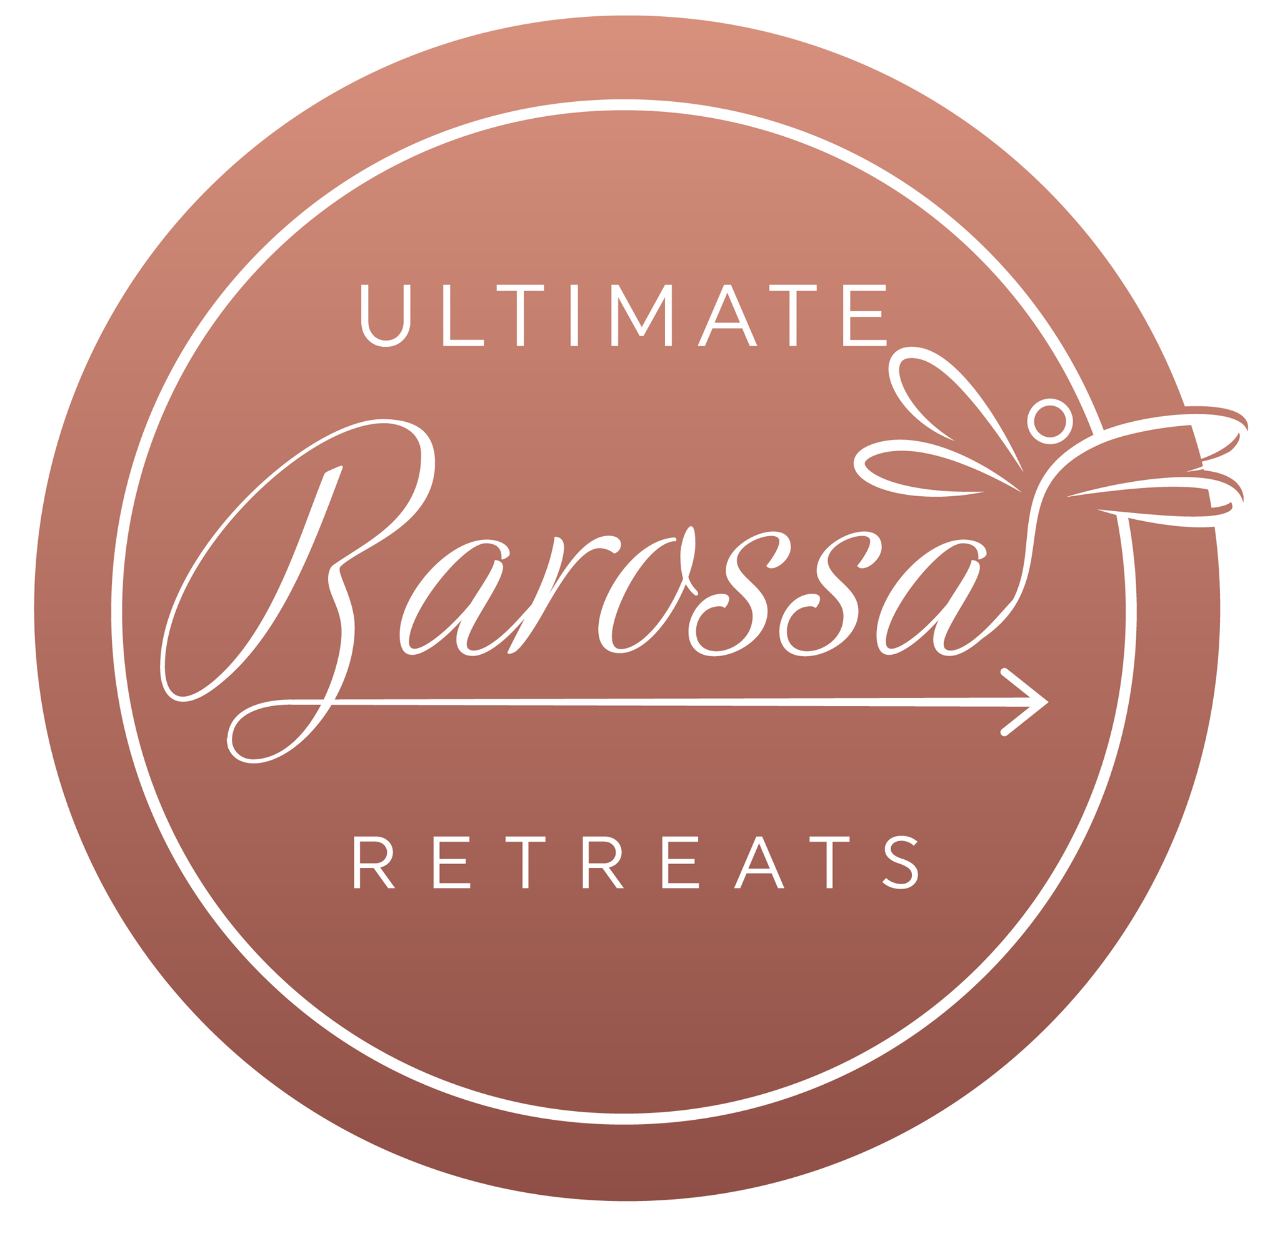 Ultimate Barossa Retreats August 2021